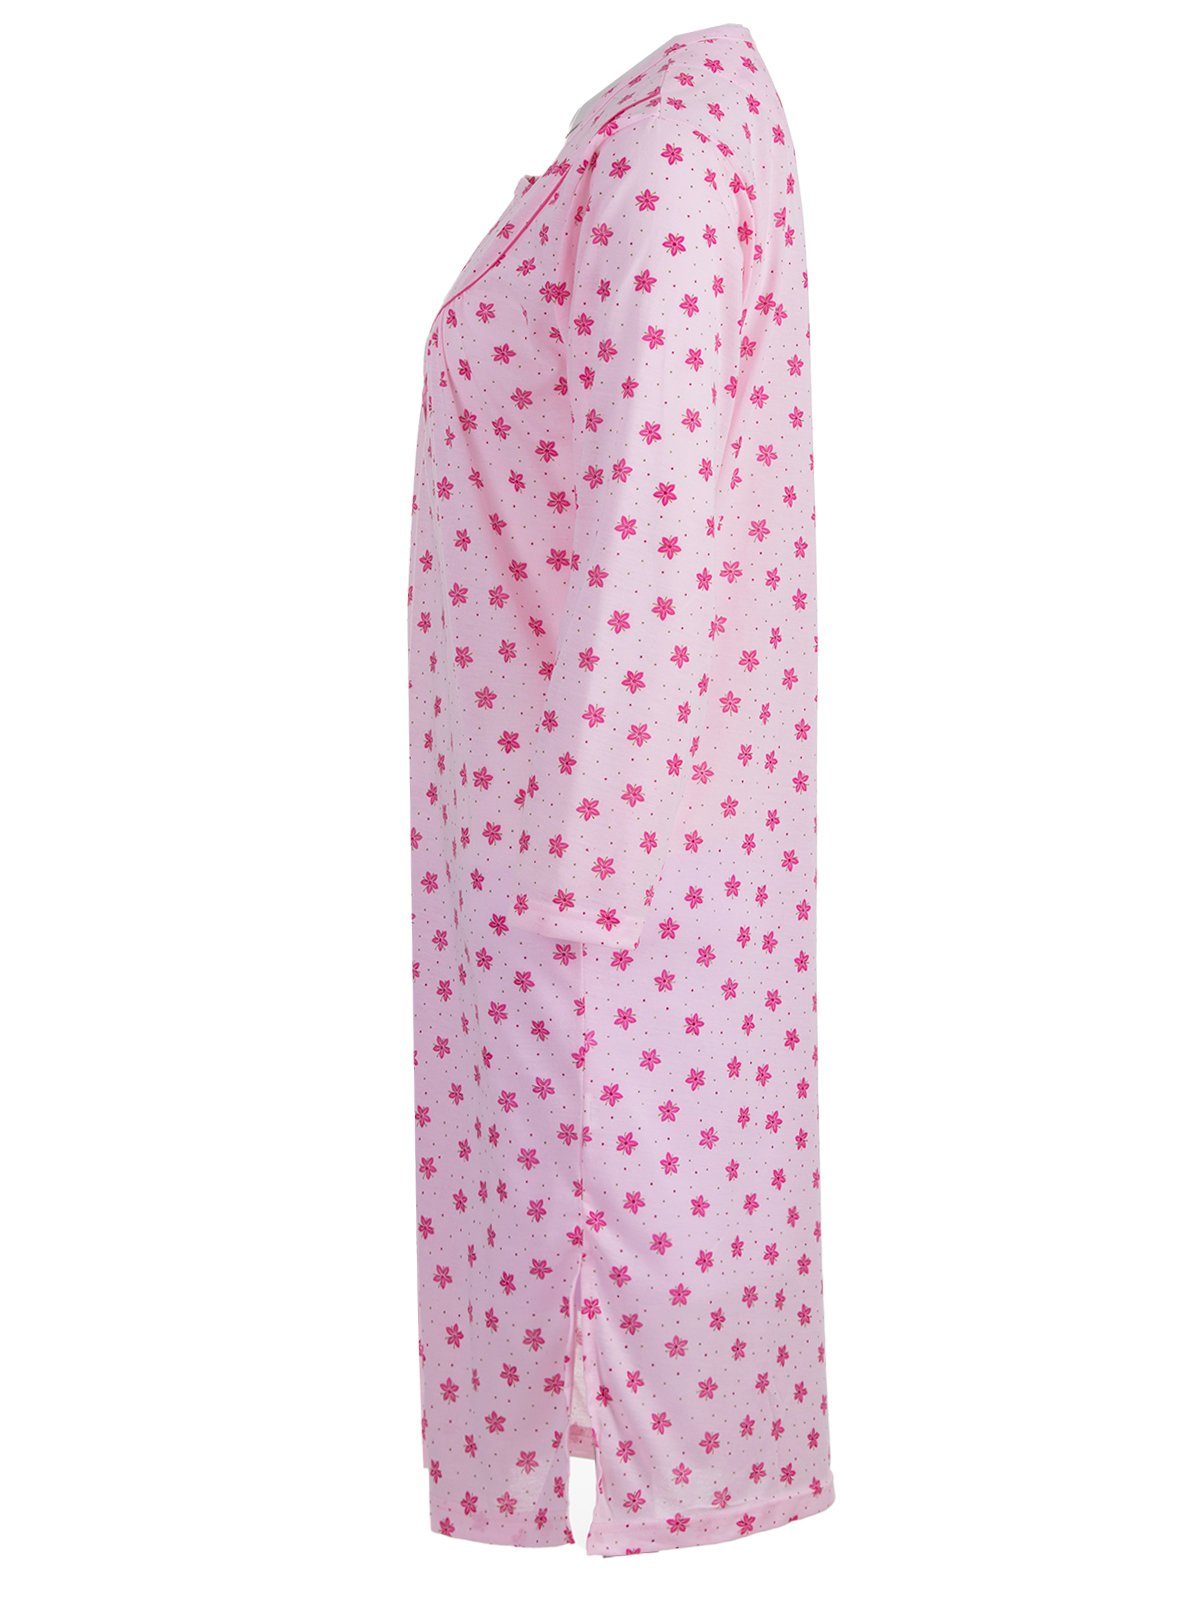 Lucky Nachthemd Nachthemd Langarm - rosa Blüten Pünktchen